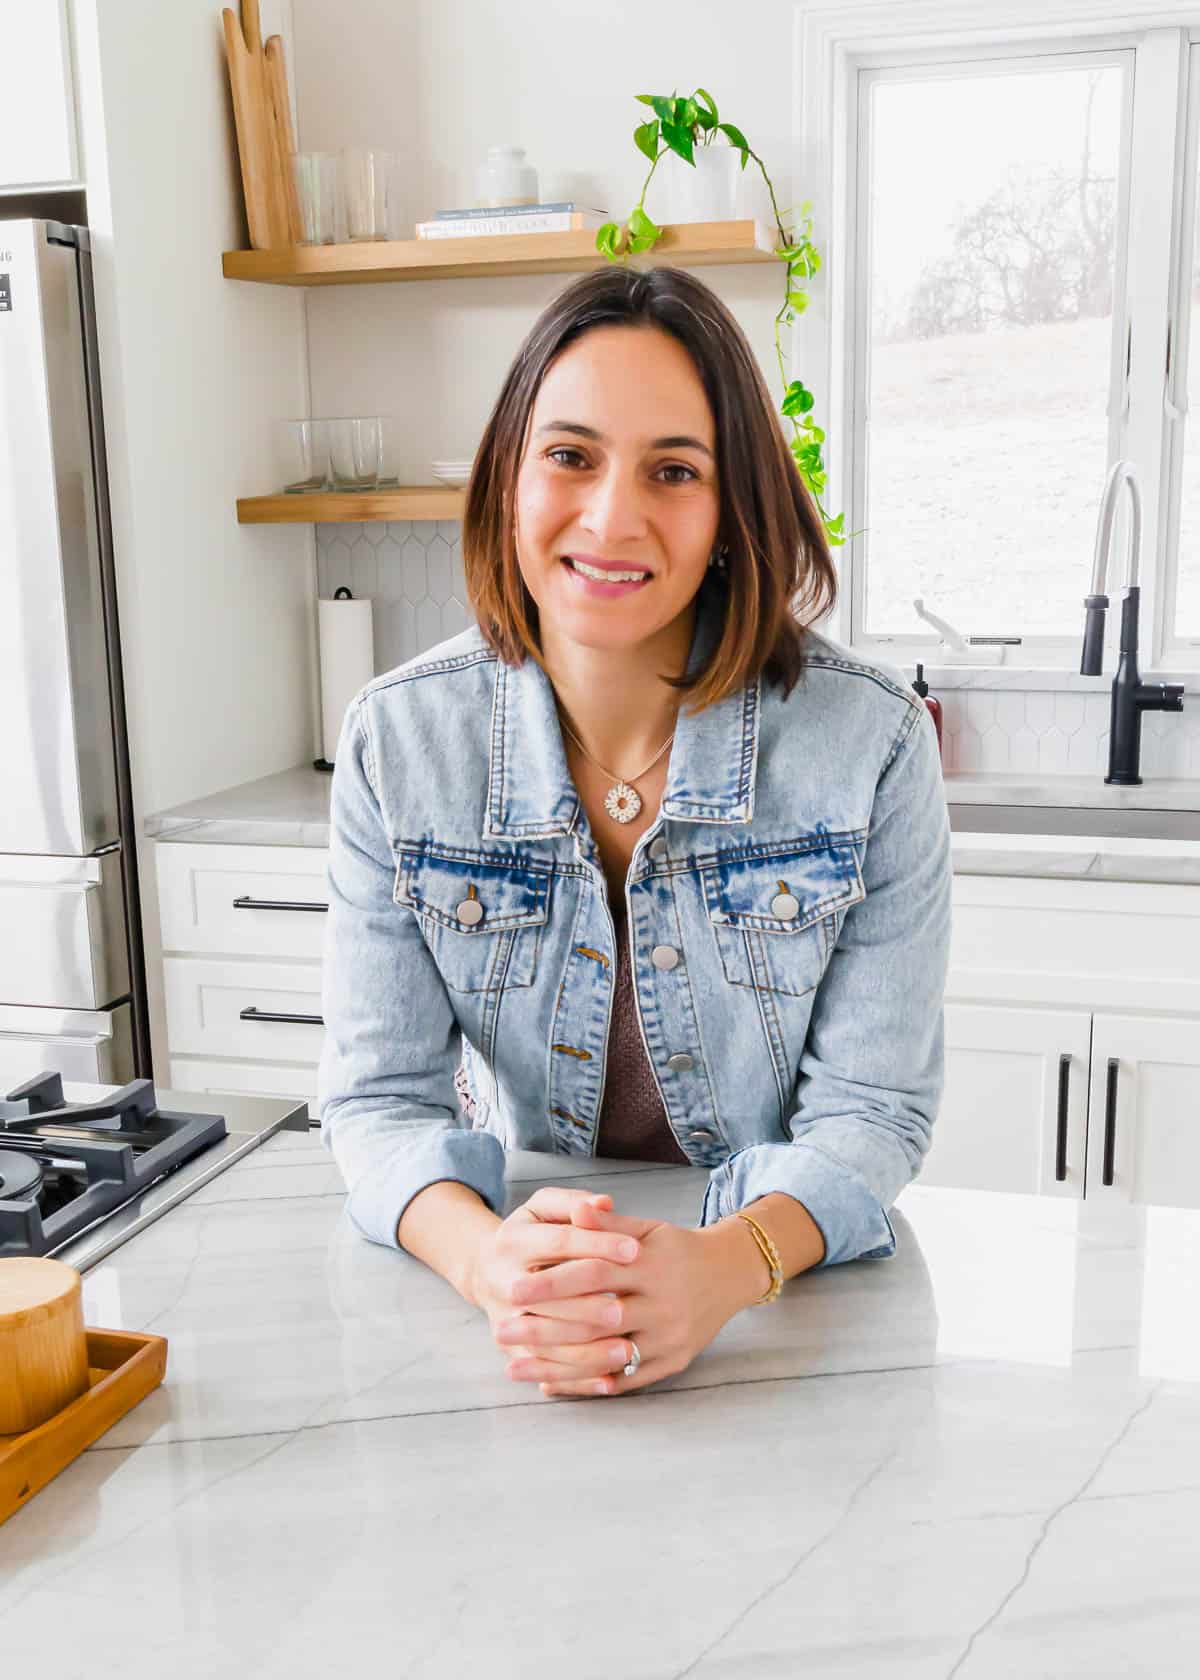 Gina Matsoukas in a denim jacket sitting at a kitchen counter.